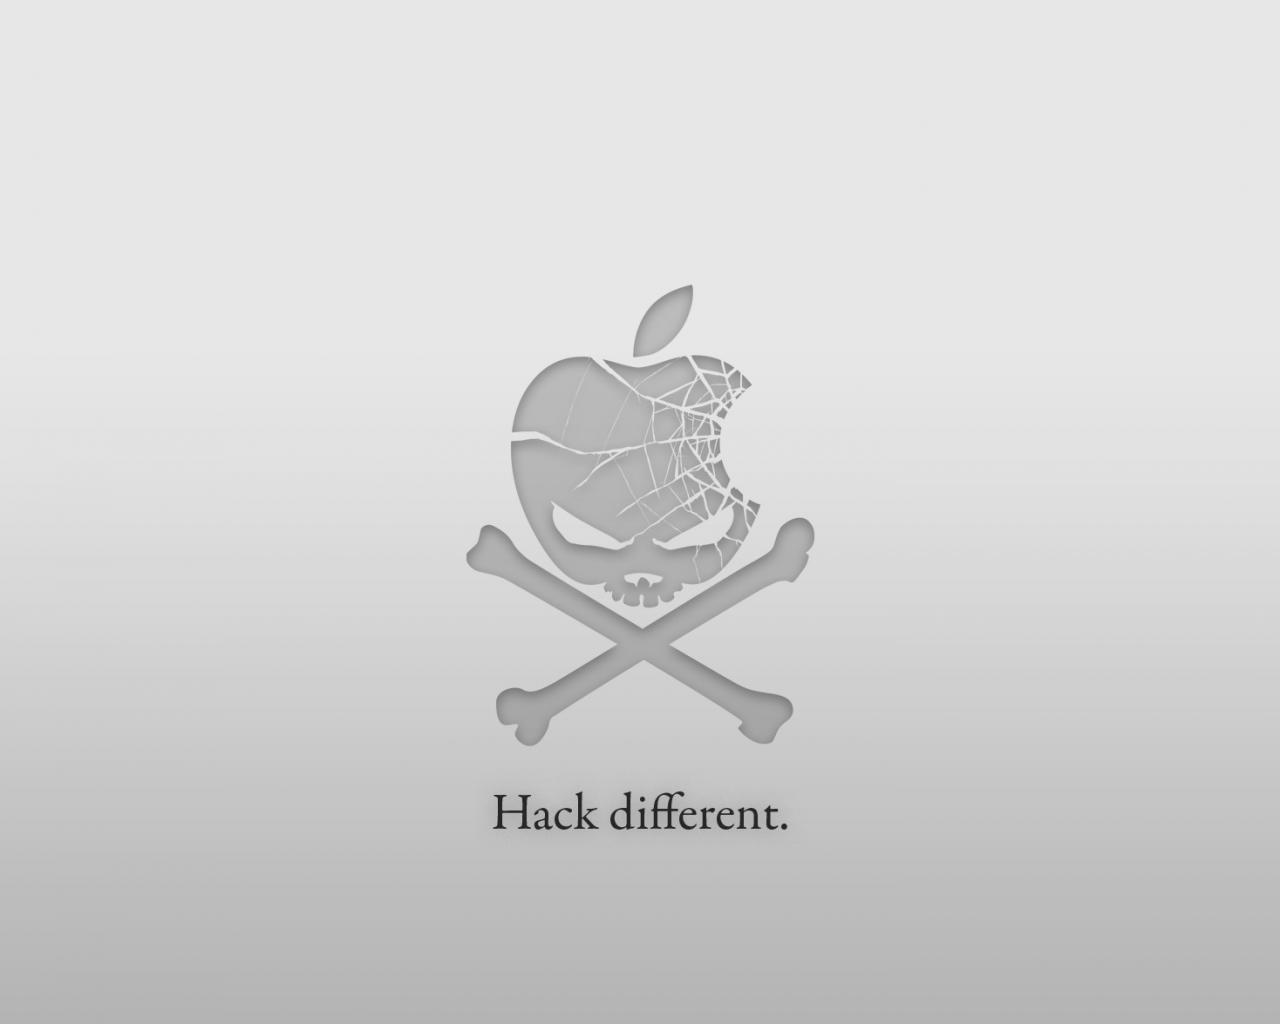 Hackers Anonymous Skull And Bones Apple Inc 1280x1024